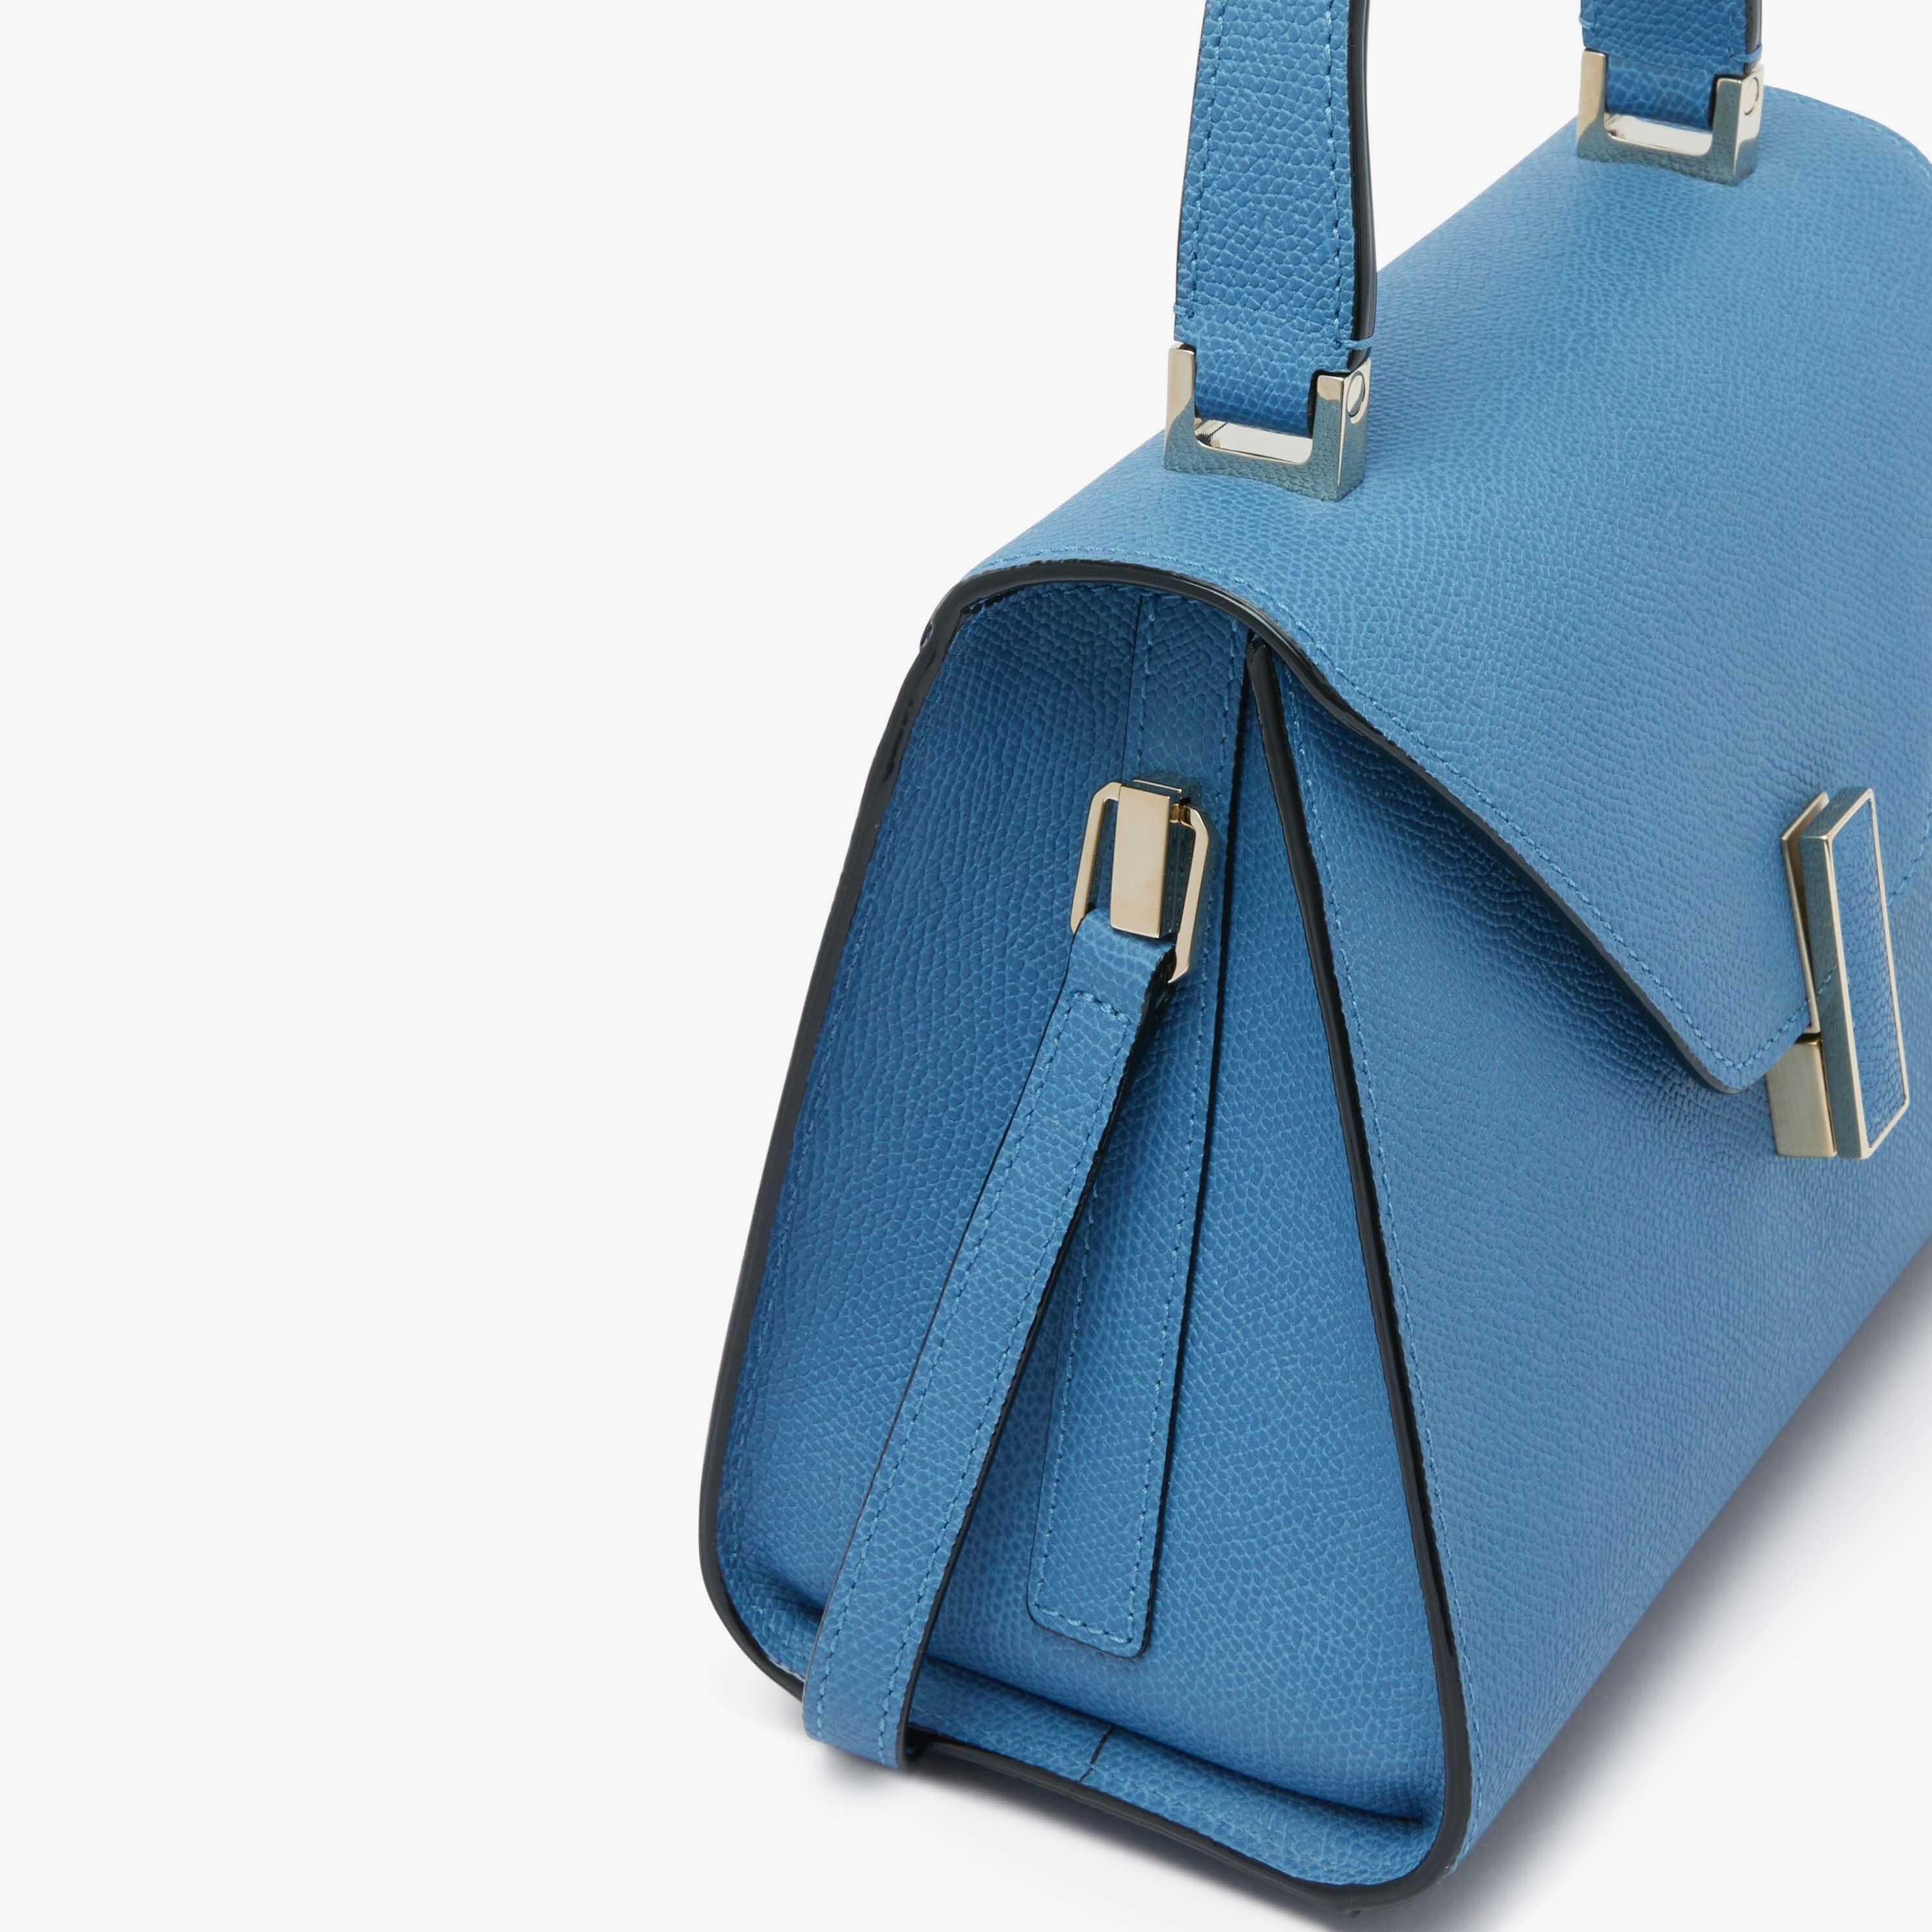 Valextra Bum belt bag - Blue